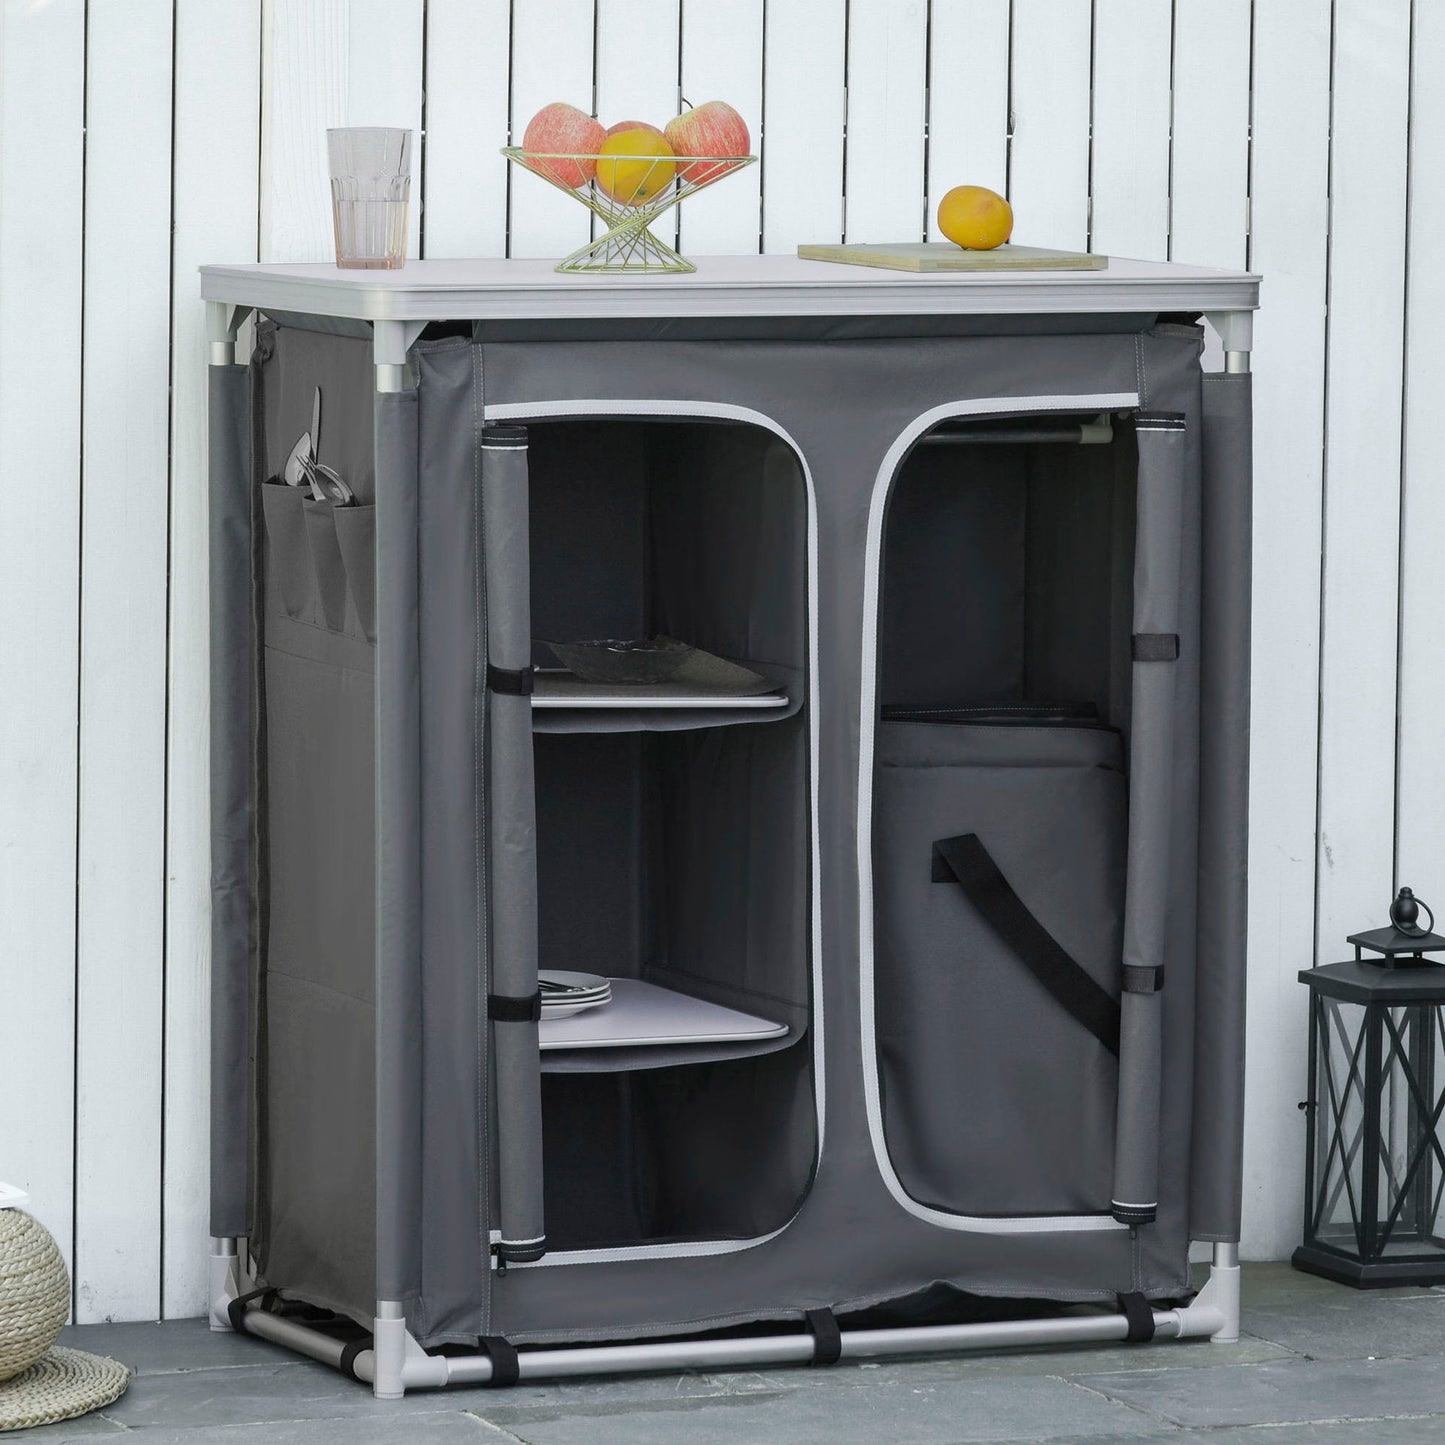 Nancy's Agincourt Camping Cupboard Portable Kitchen Box - Grijs - Aluminium, Oxford Stof, Mdf - 37,79 cm x 19,48 cm x 40,94 cm